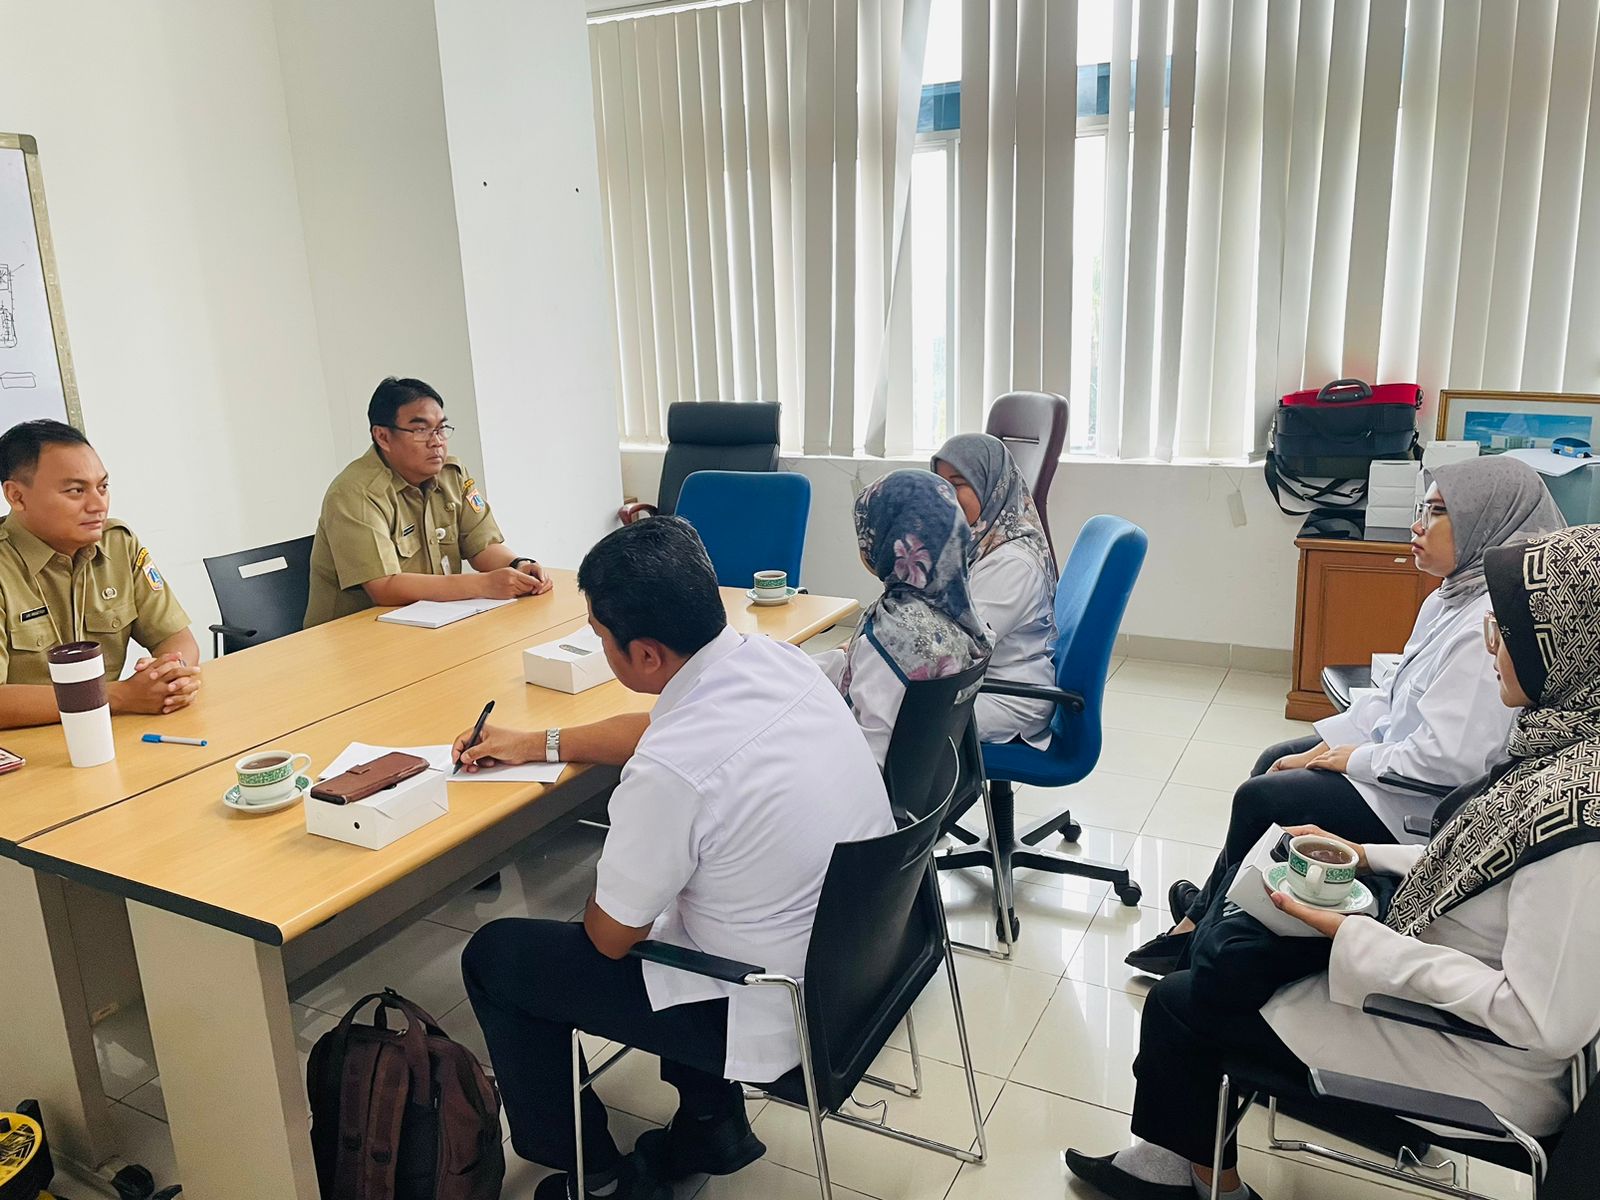 Peduli Arsip, Tim Laboratorium ANRI Kunjungi Dispusip DKI Jakarta